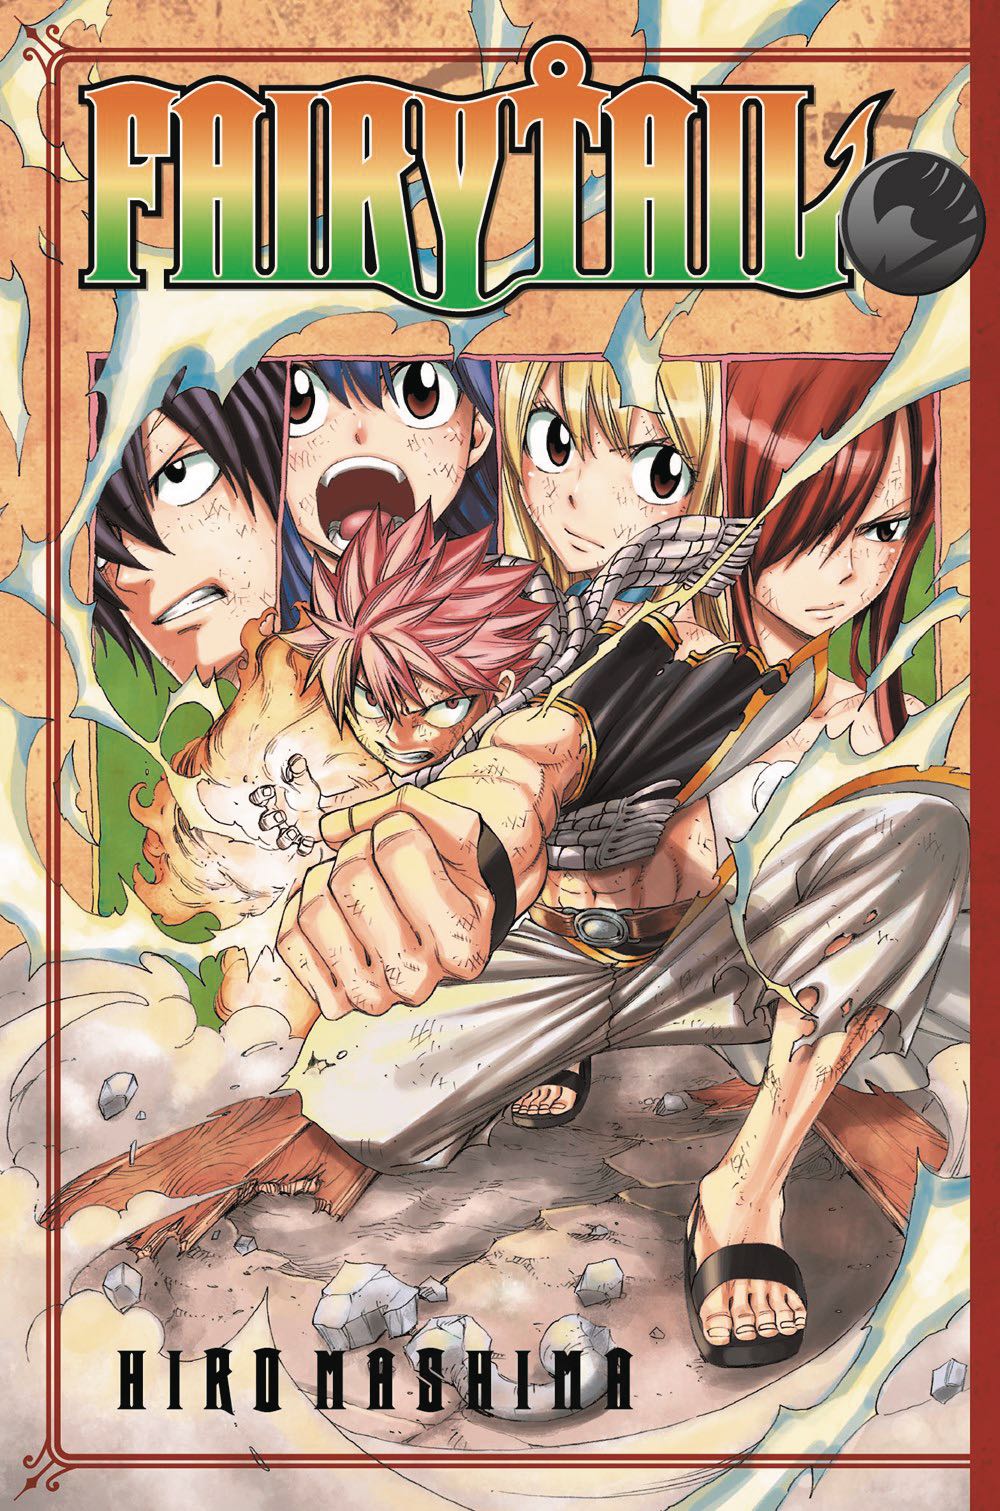 FAIRY TAIL Manga Box Set, Volume 3